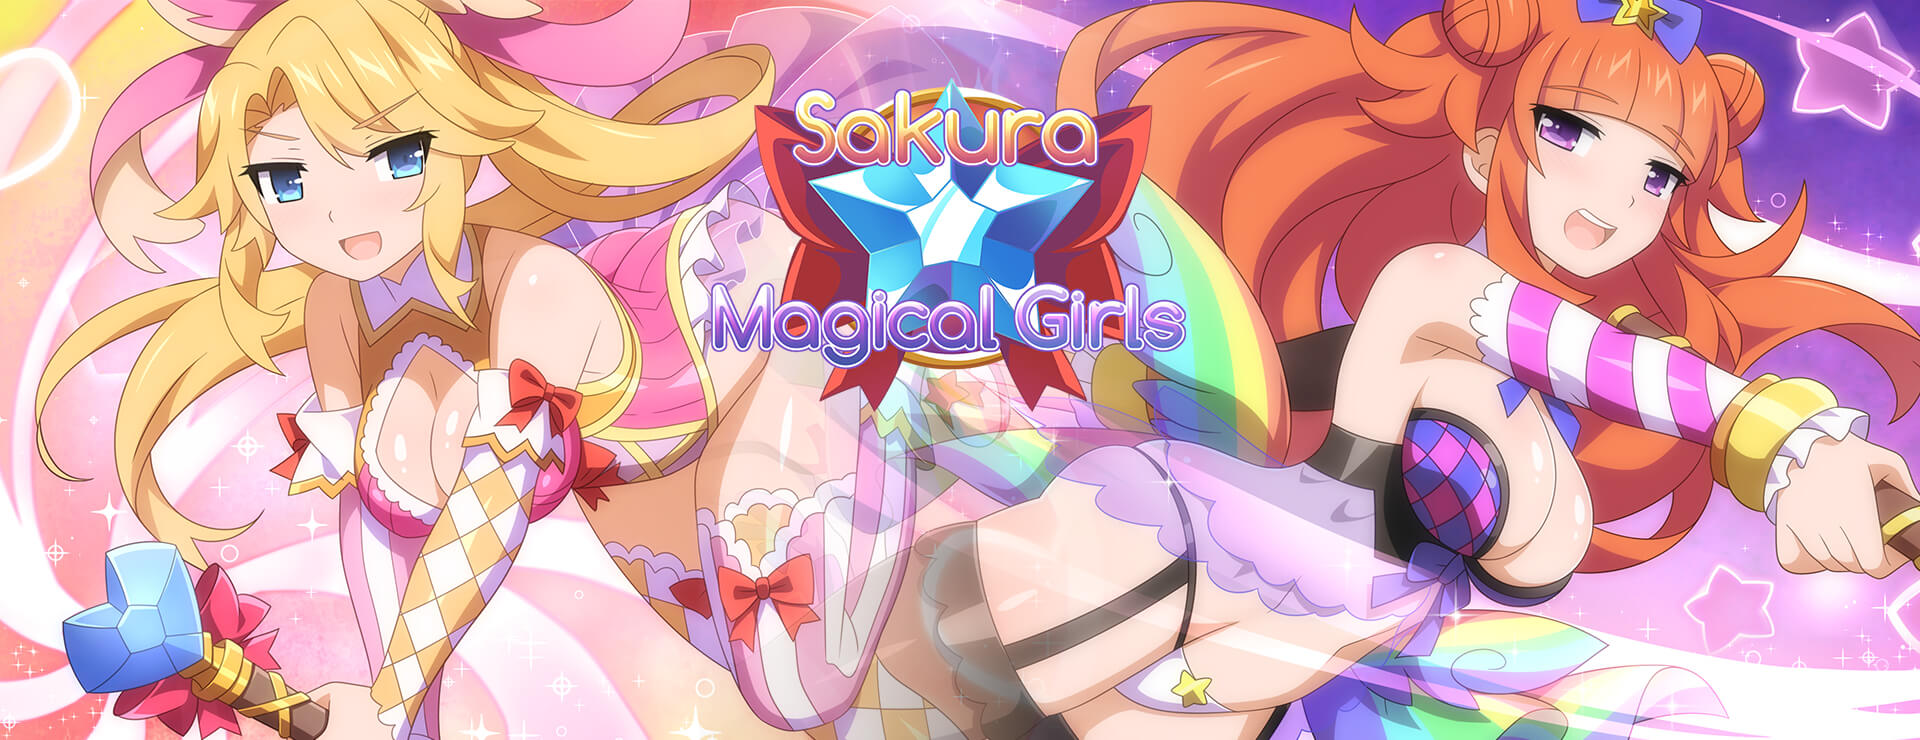 Sakura Magical Girls - Novela Visual Juego